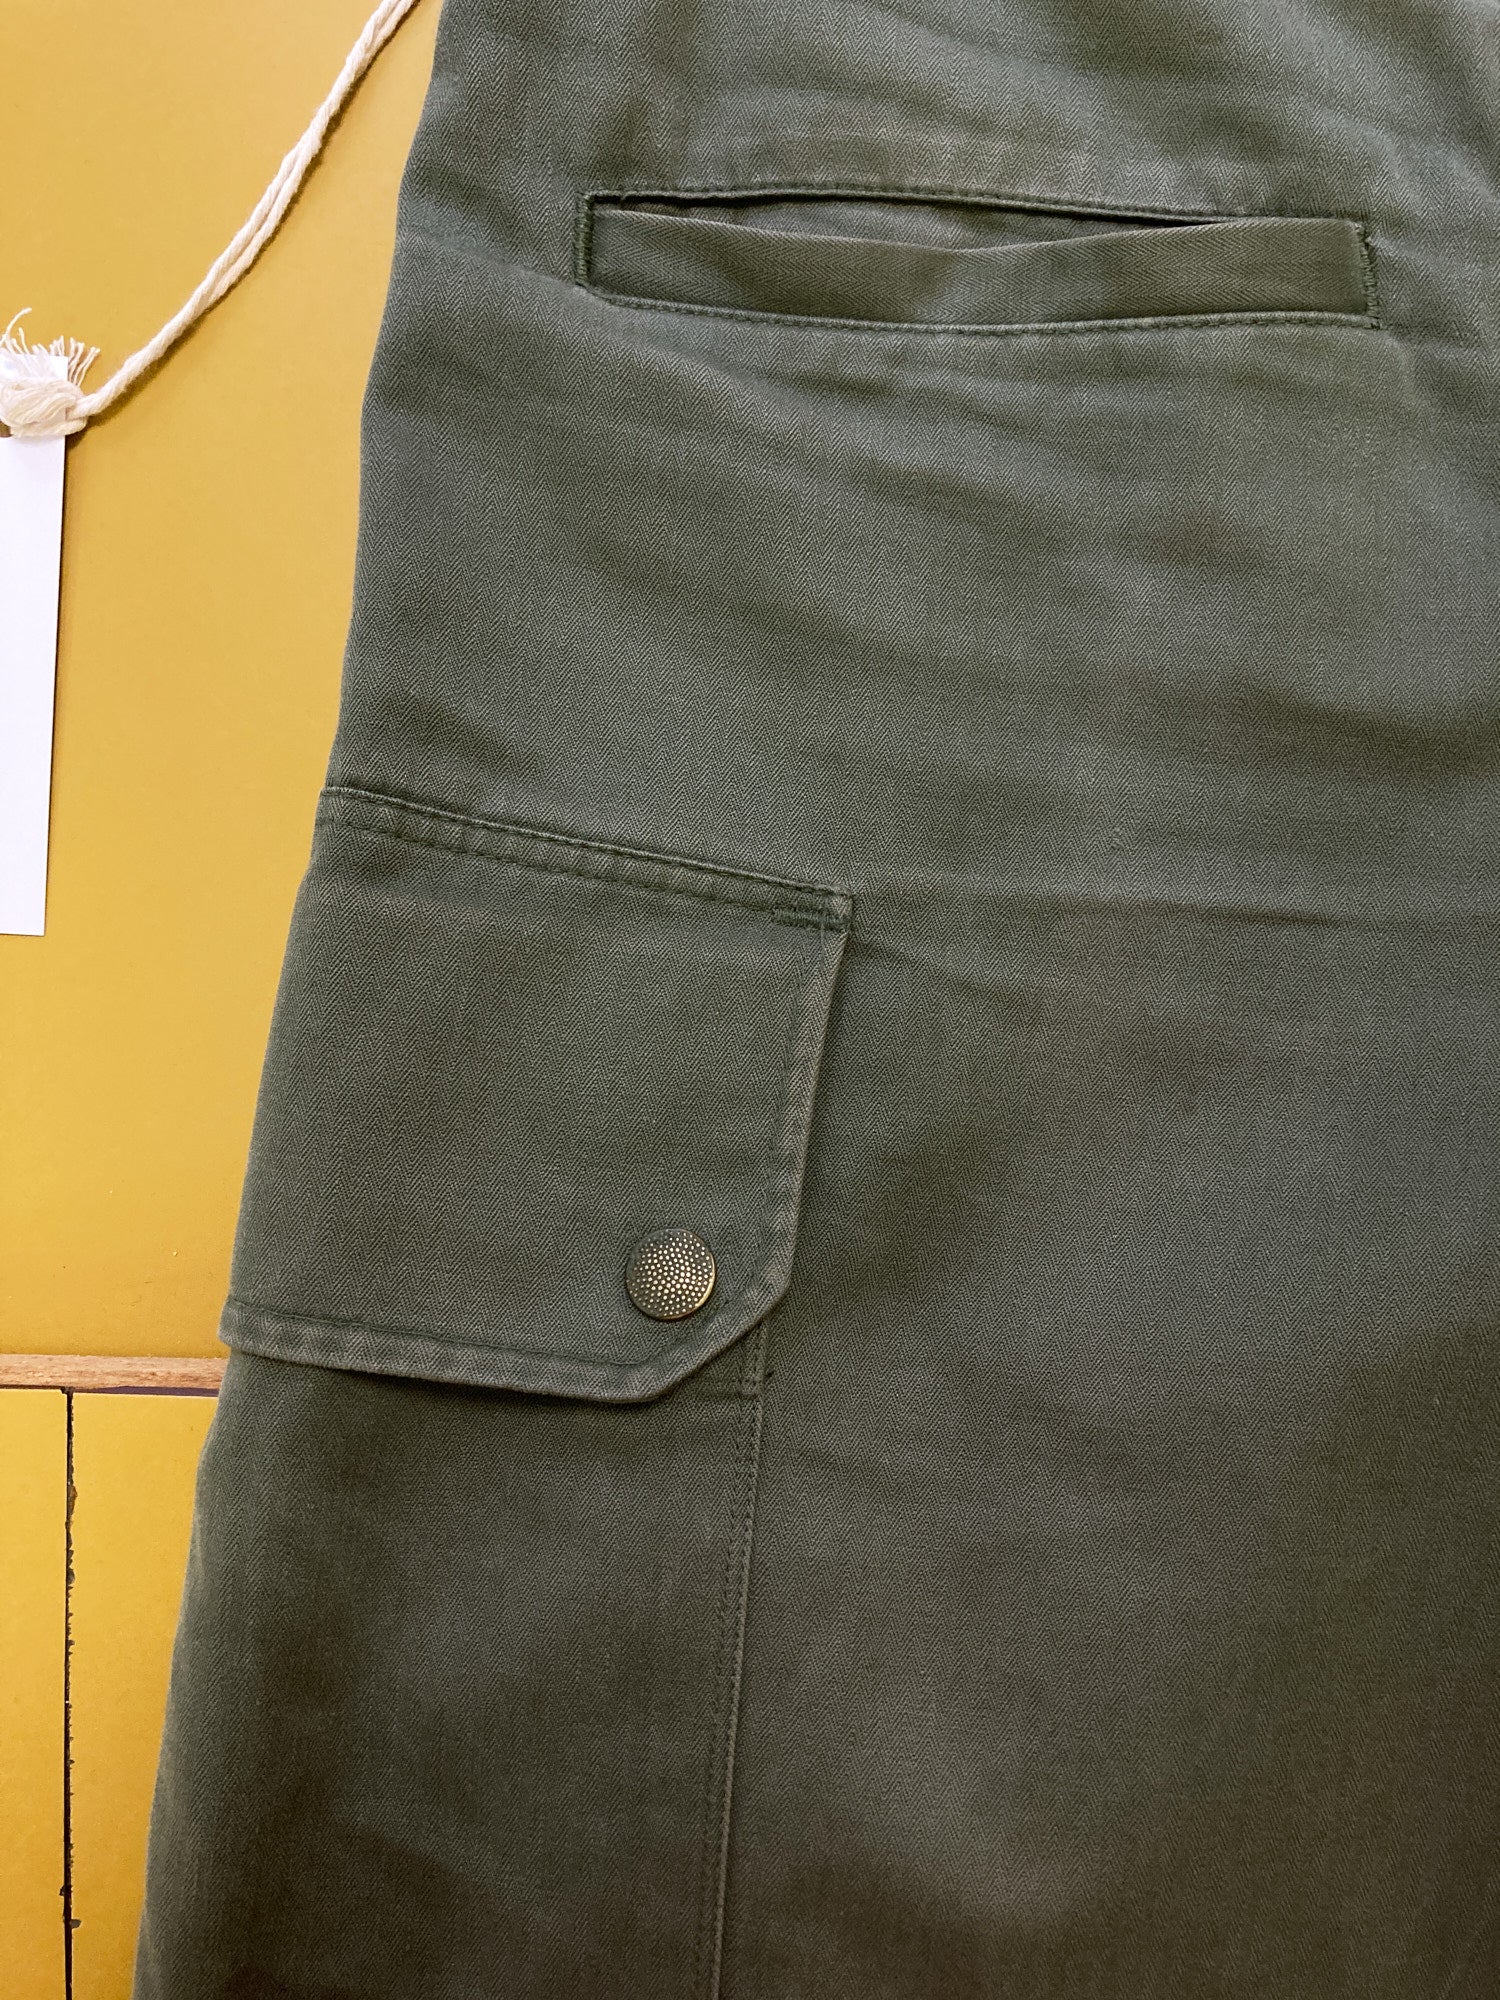 Vintage Seyntex khaki cotton army surplus cargo trousers - mens S XS